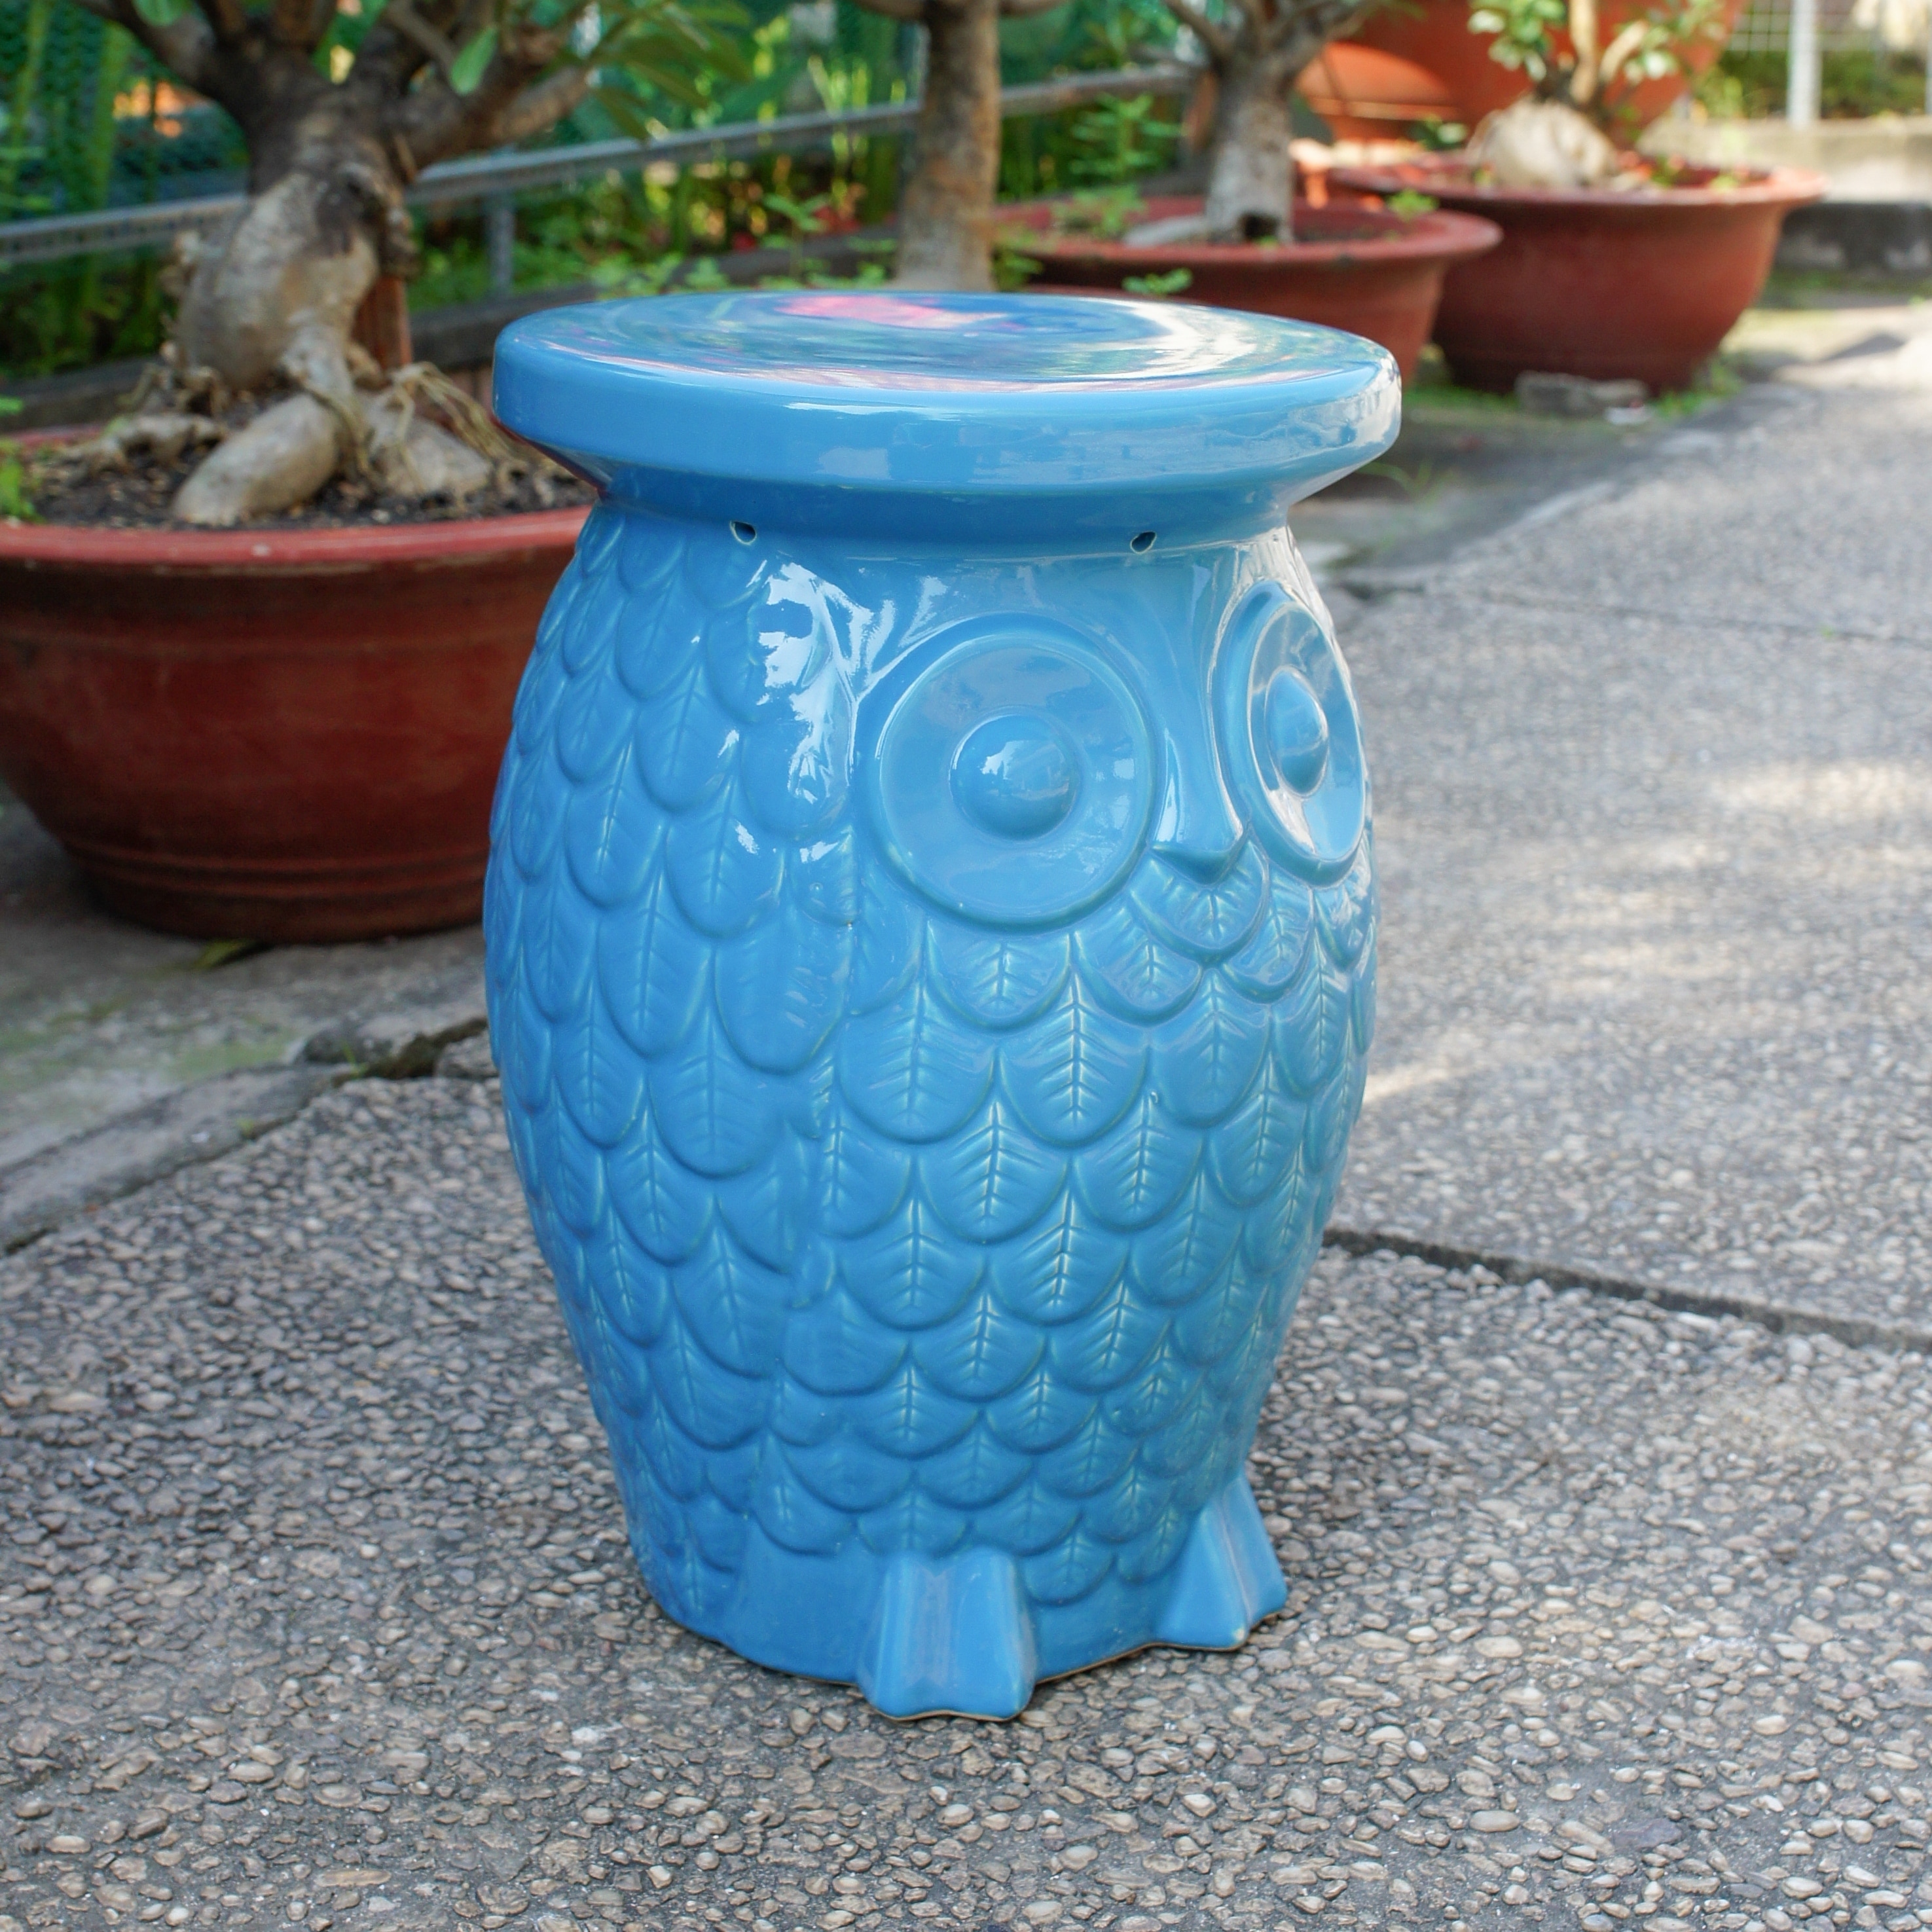 International Caravan Wise Old Owl Ceramic Garden Stool - image 2 of 5